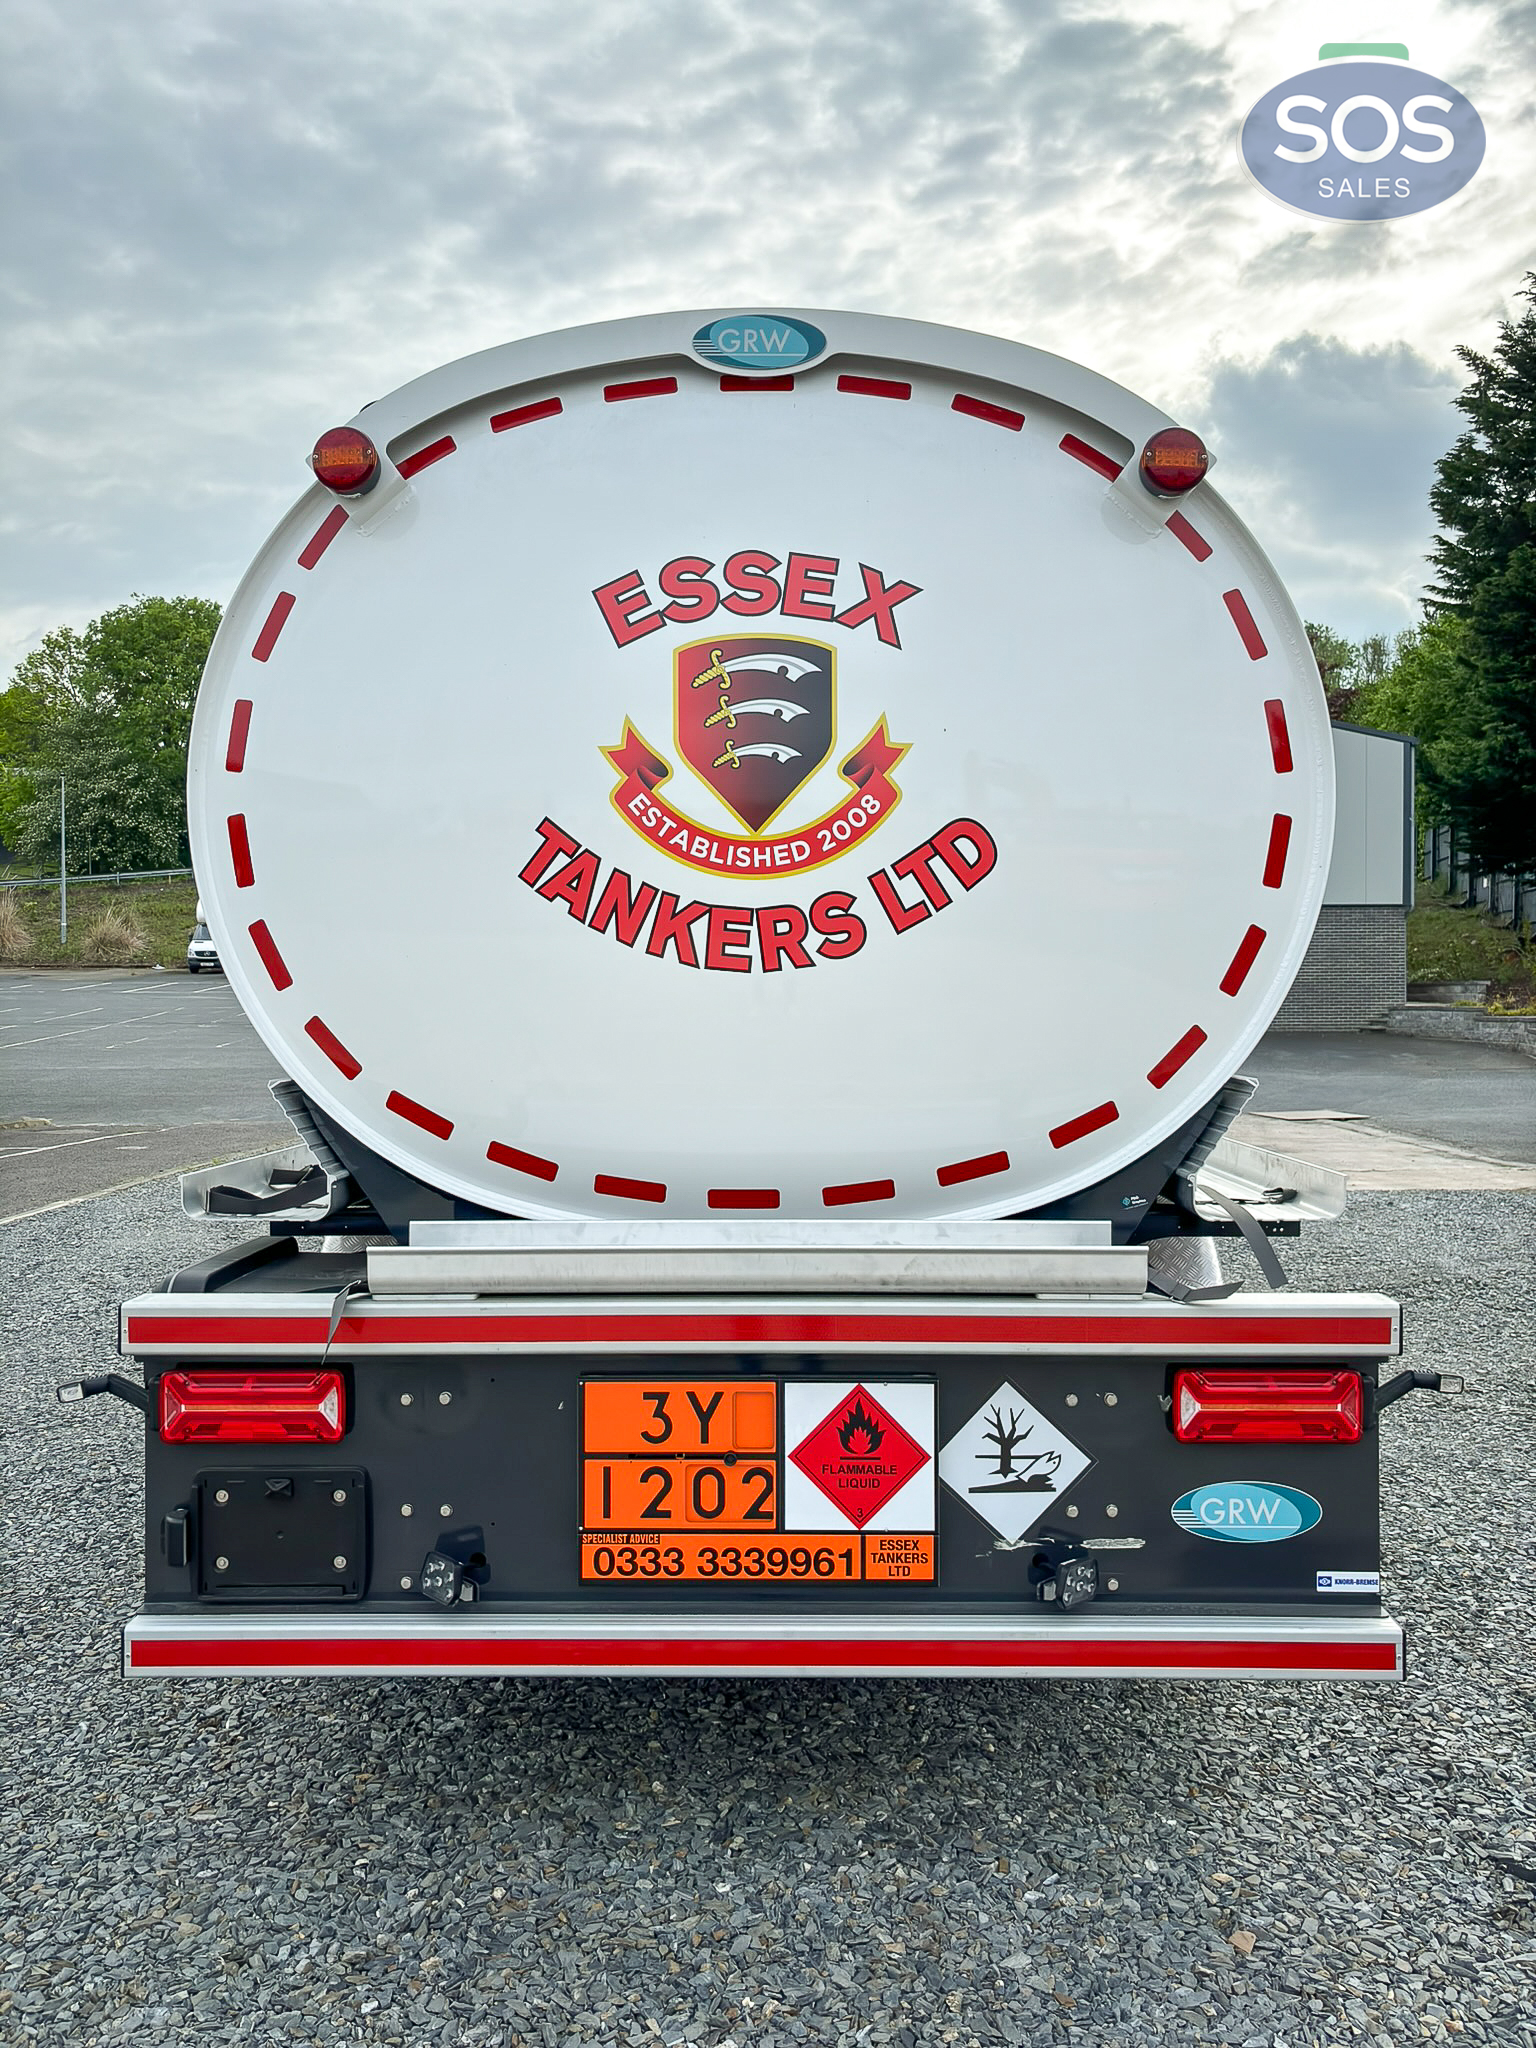 Essex Tankers: GRW Fuel Tanker to London